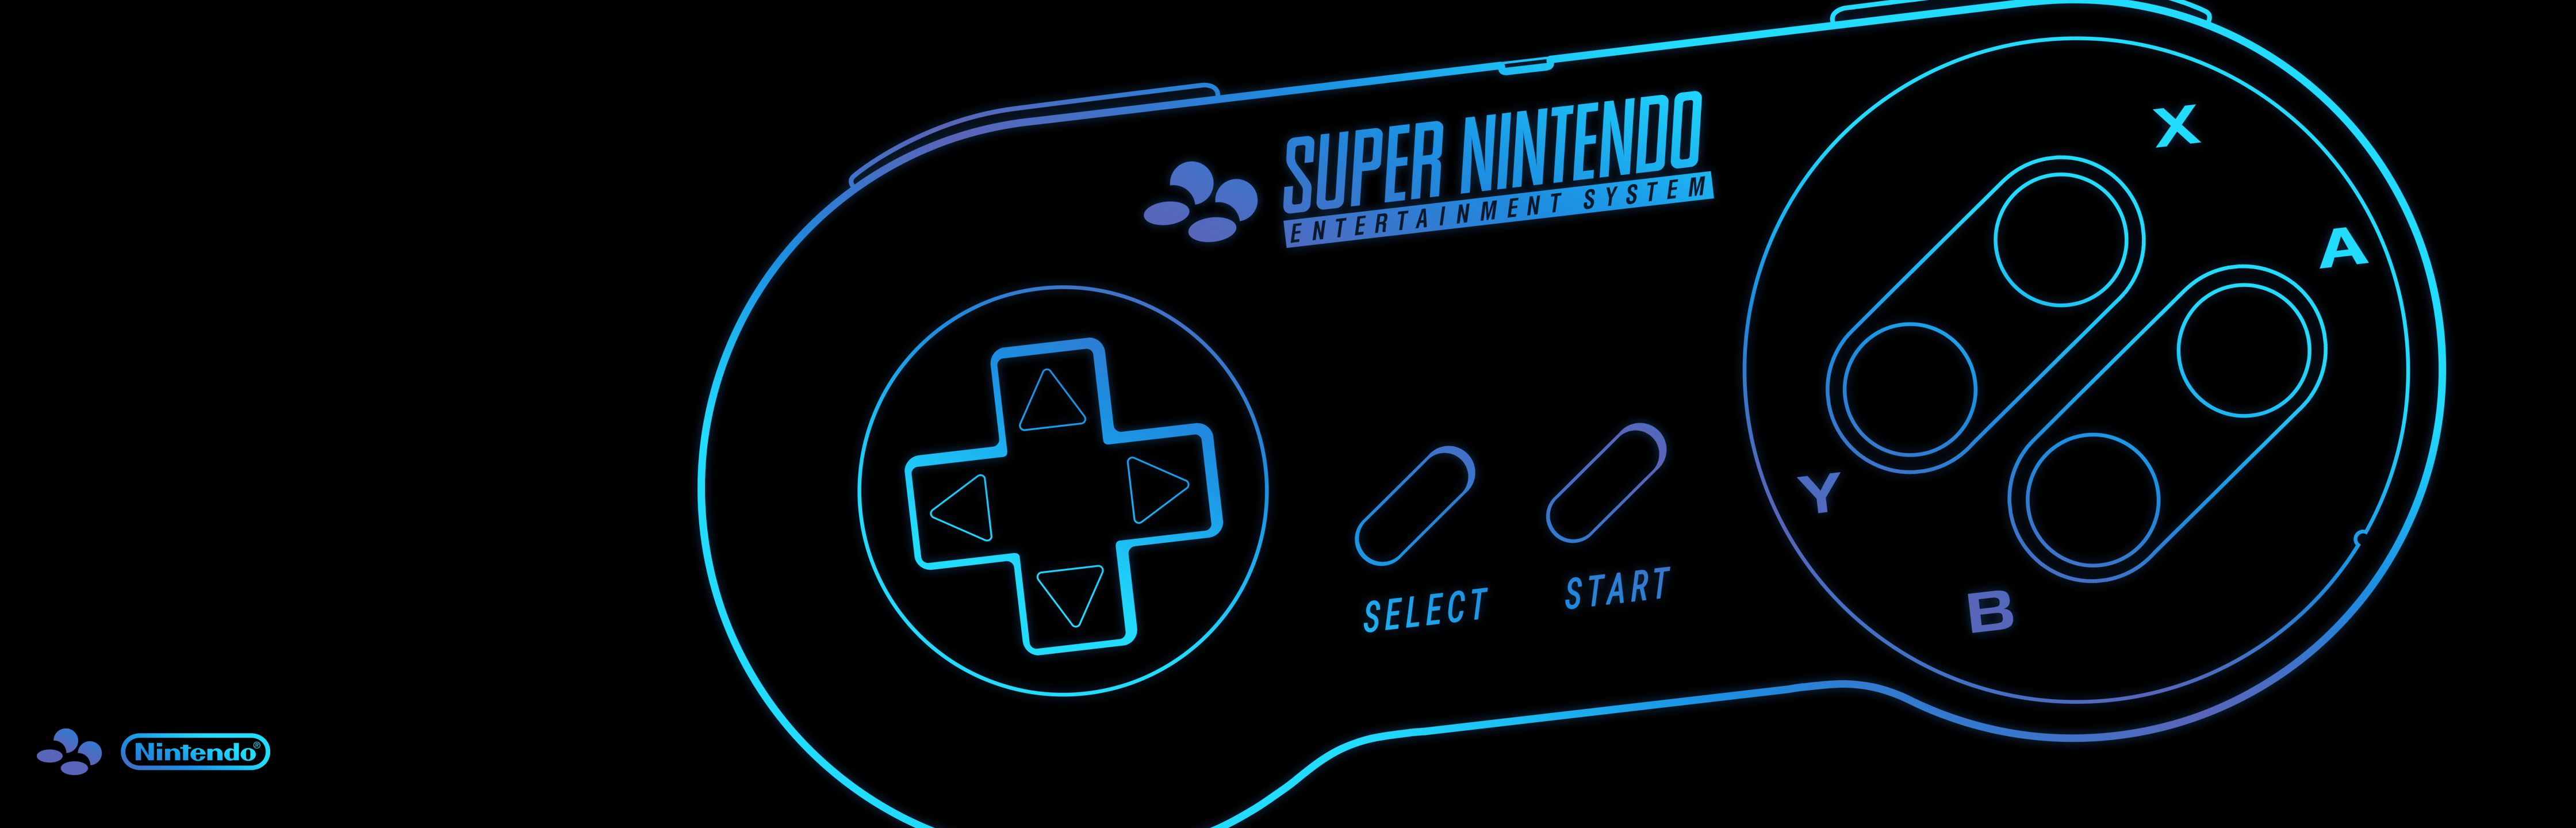 SNES Nintendo Super Nintendo Logo Controllers Console 16 Bit Retro Console Video Games Digital Art S 4480x1440